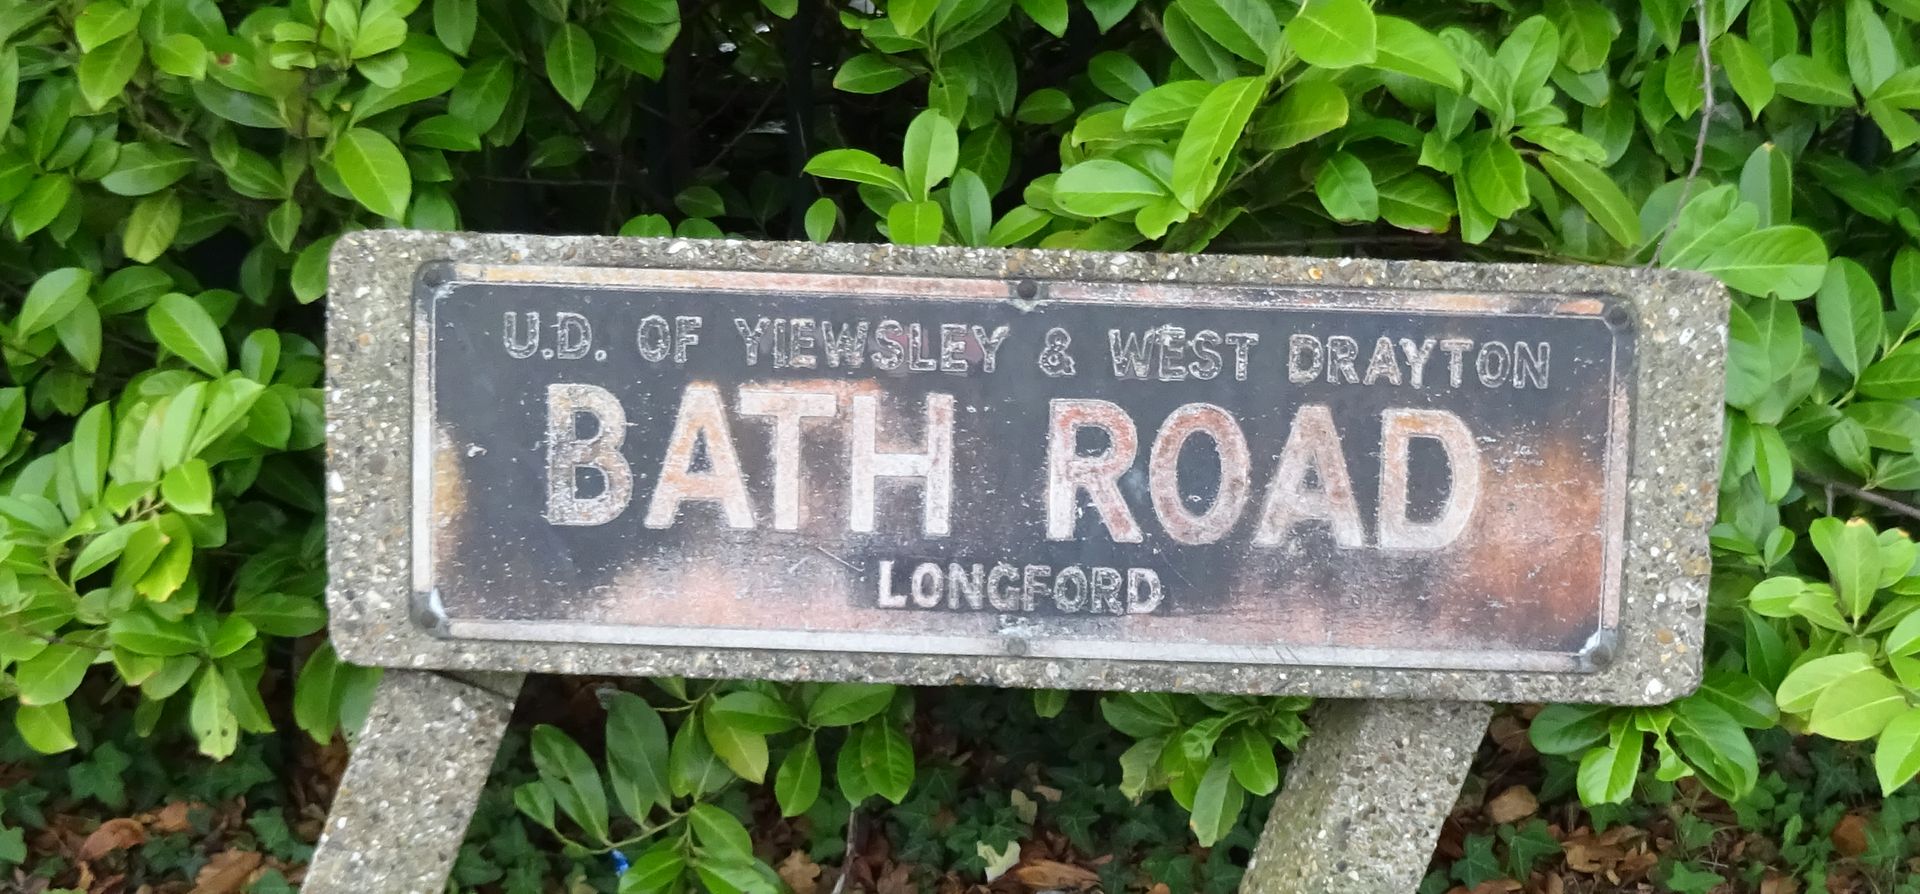 The Bath Road at Longford